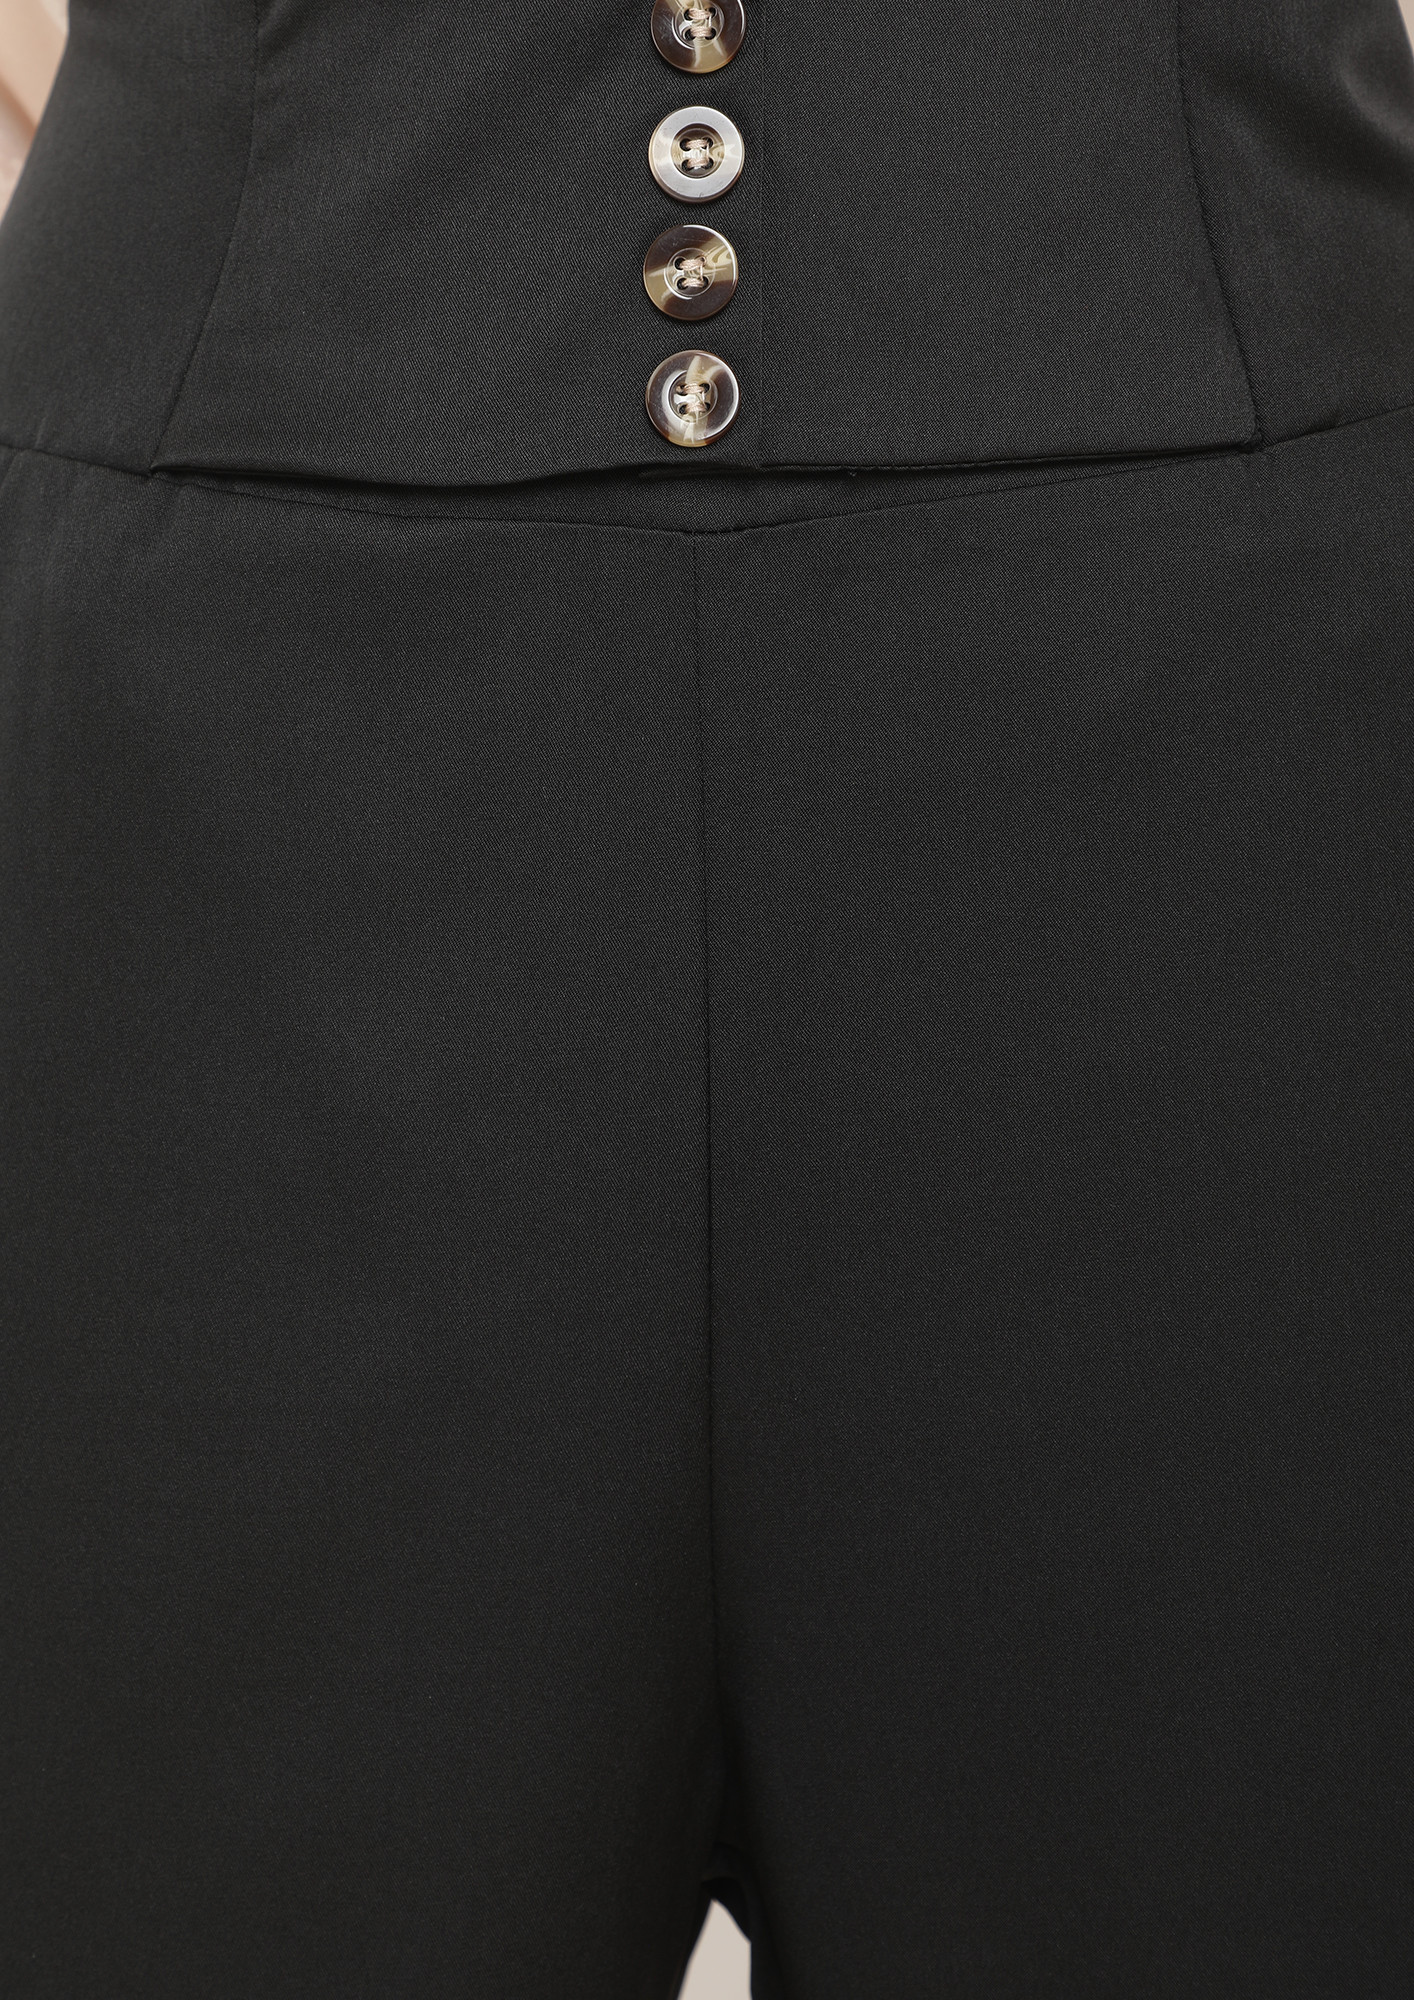 Buy Zastraa Women Maroon Slim Fit Solid Peg Trousers at Amazonin